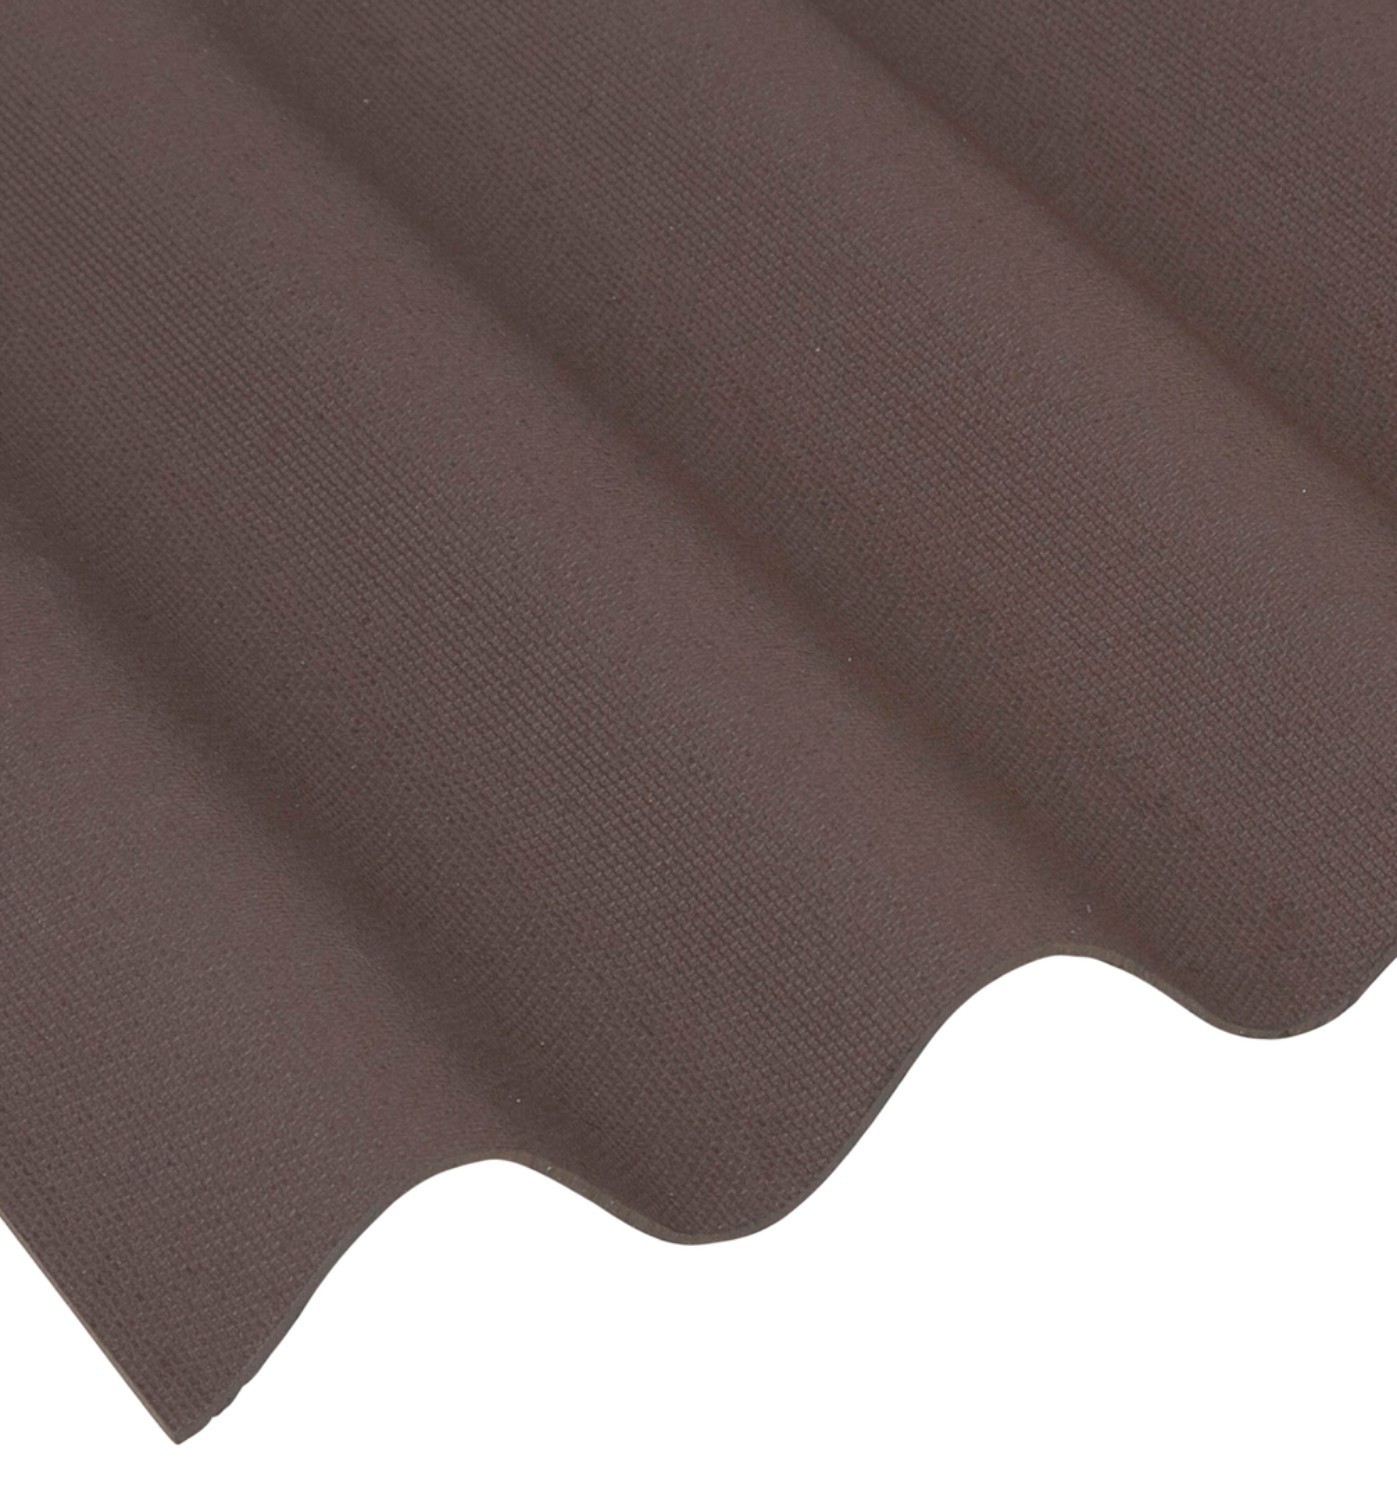 Coroline - Corrugated Bitumen Roof Sheet - Brown (2000 x 950mm)